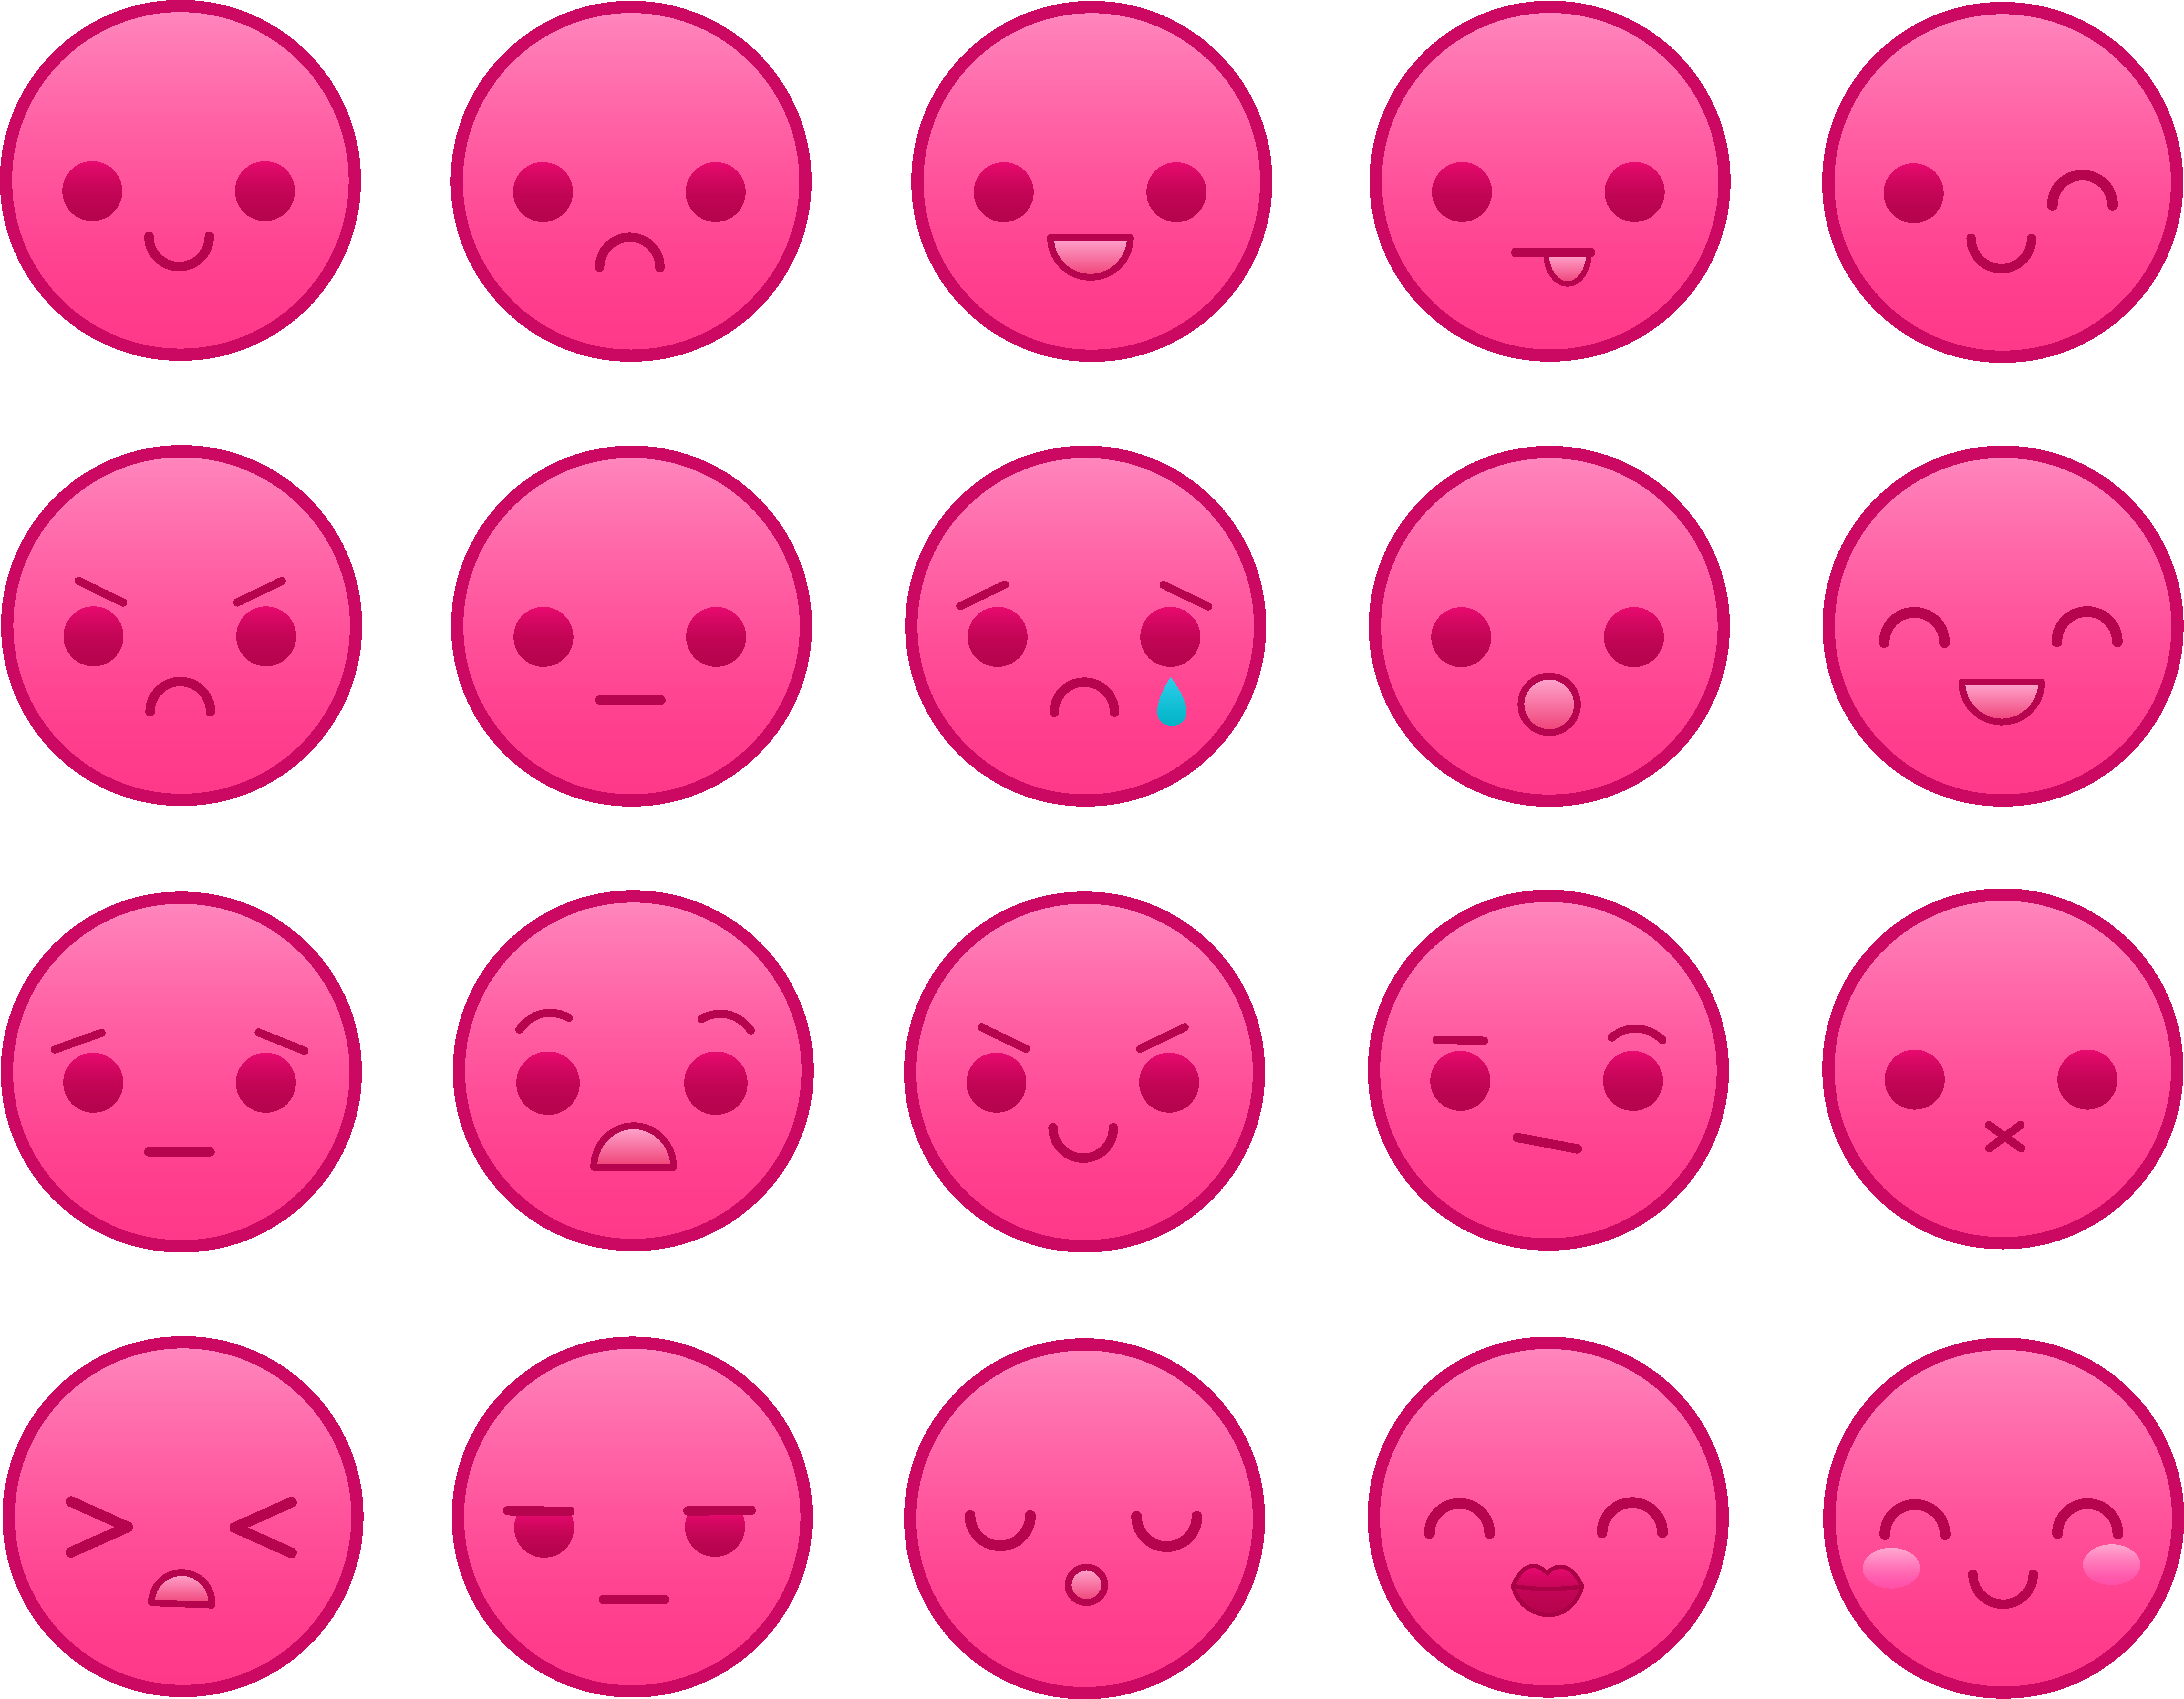 Smiley clipart symbol. Pink emoticons set free